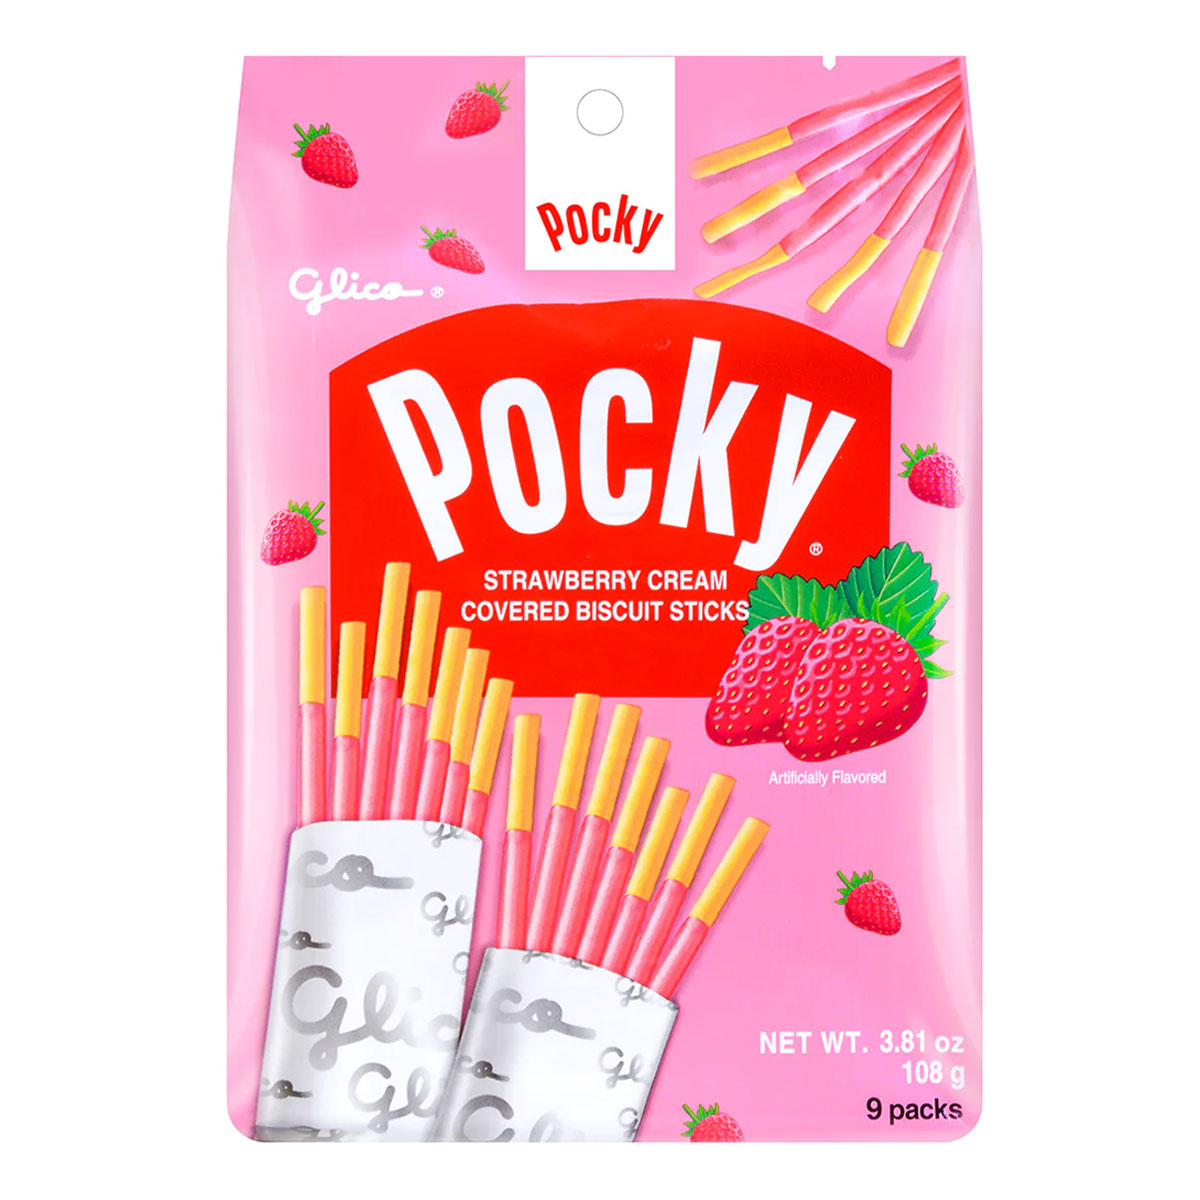  Popular Great Taste Japanese Snacks(14 Packs) by Pocky